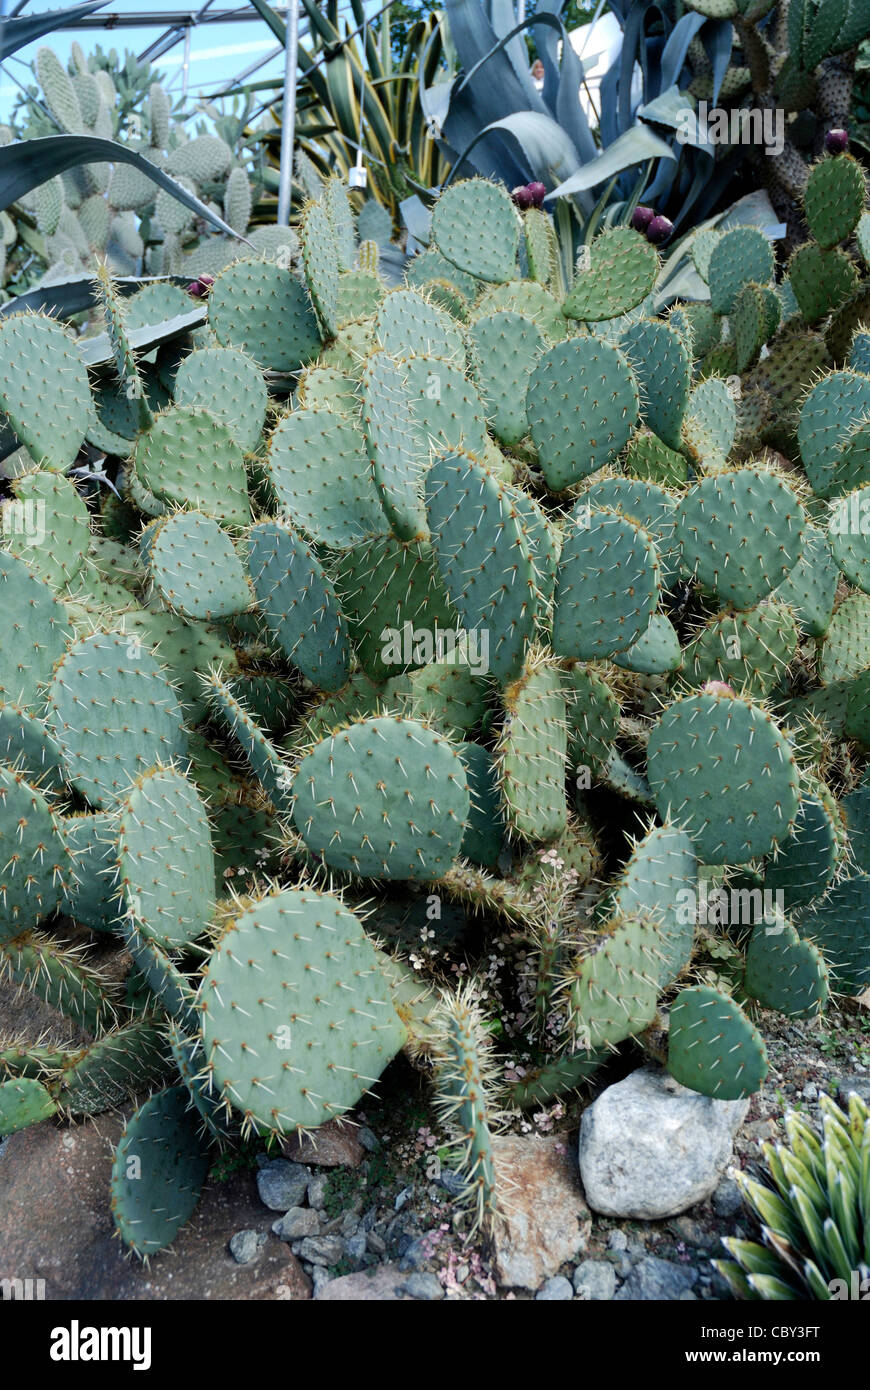 Il Cactus Opuntia ficus indica nel Giardino Botanico di Merano. Foto Stock